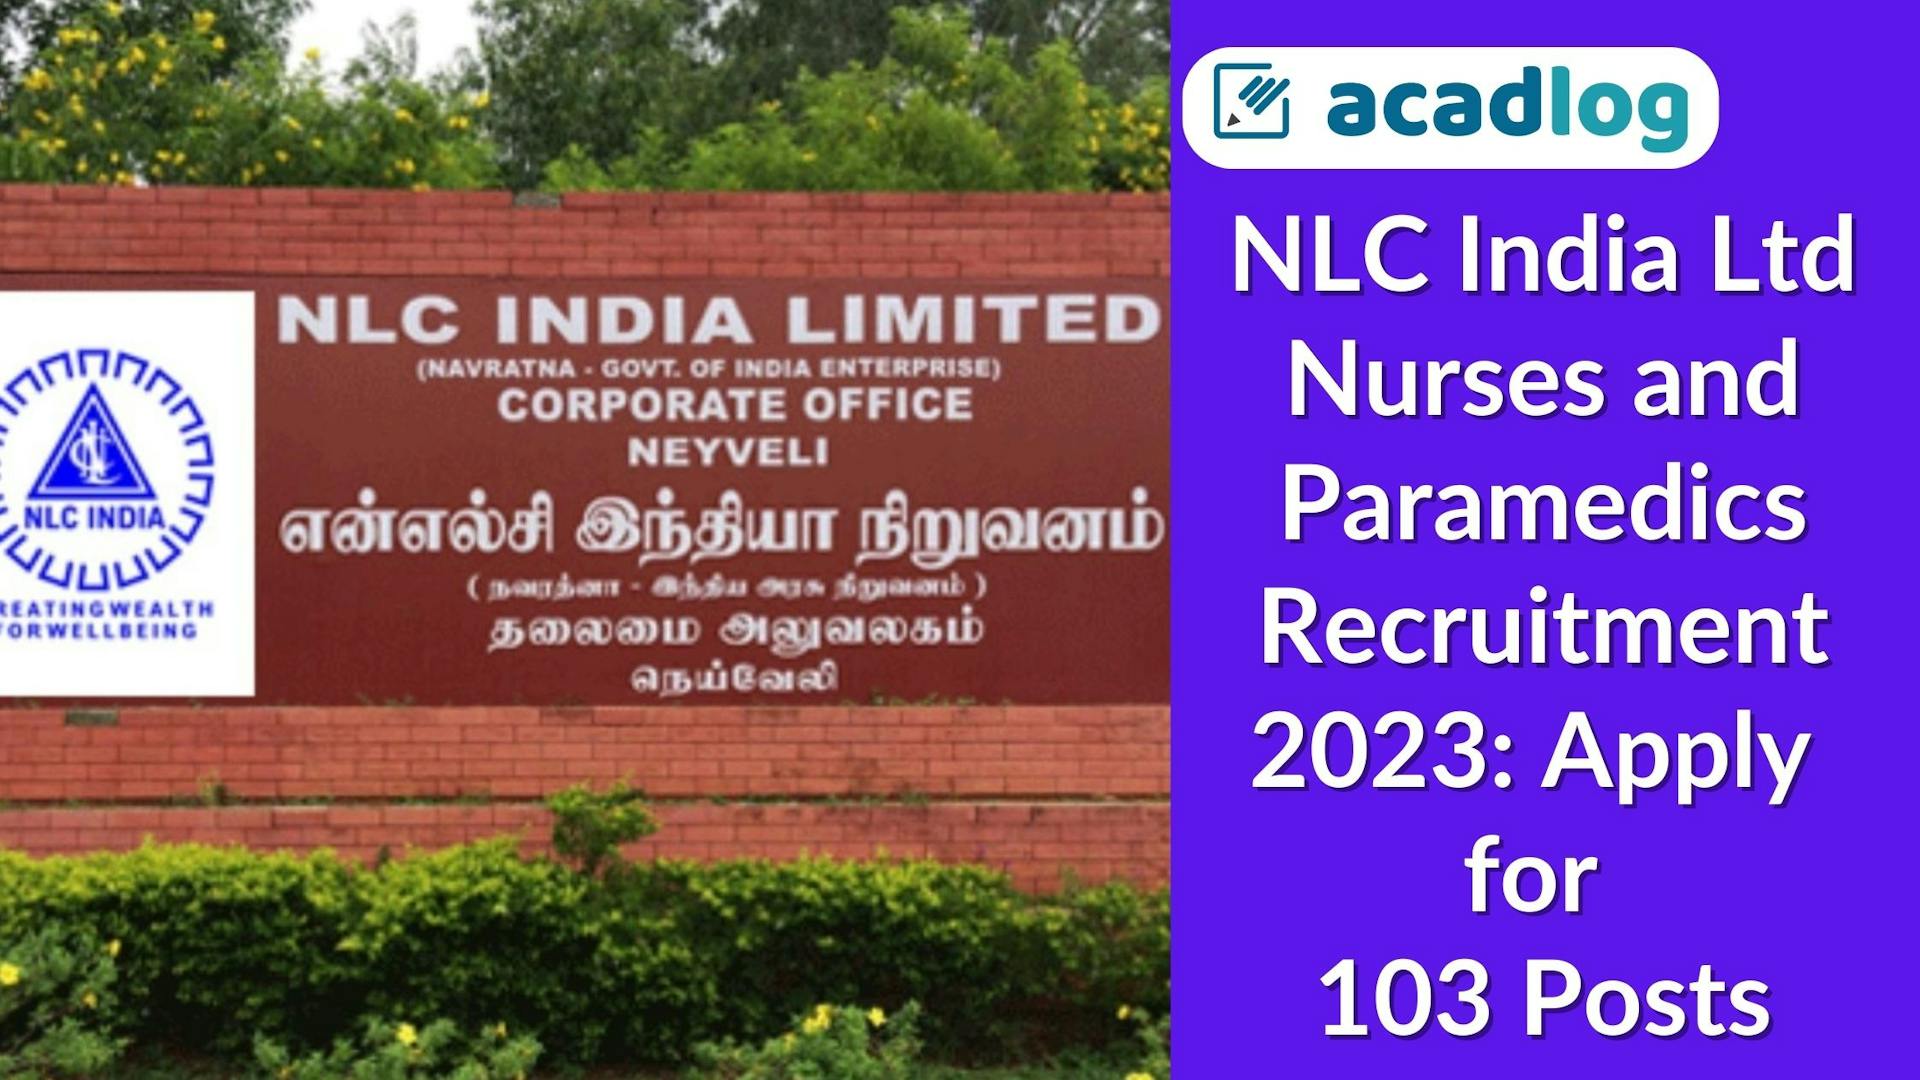 NLC India Ltd Nurses and Paramedics Recruitment 2023: Apply for 103 Posts